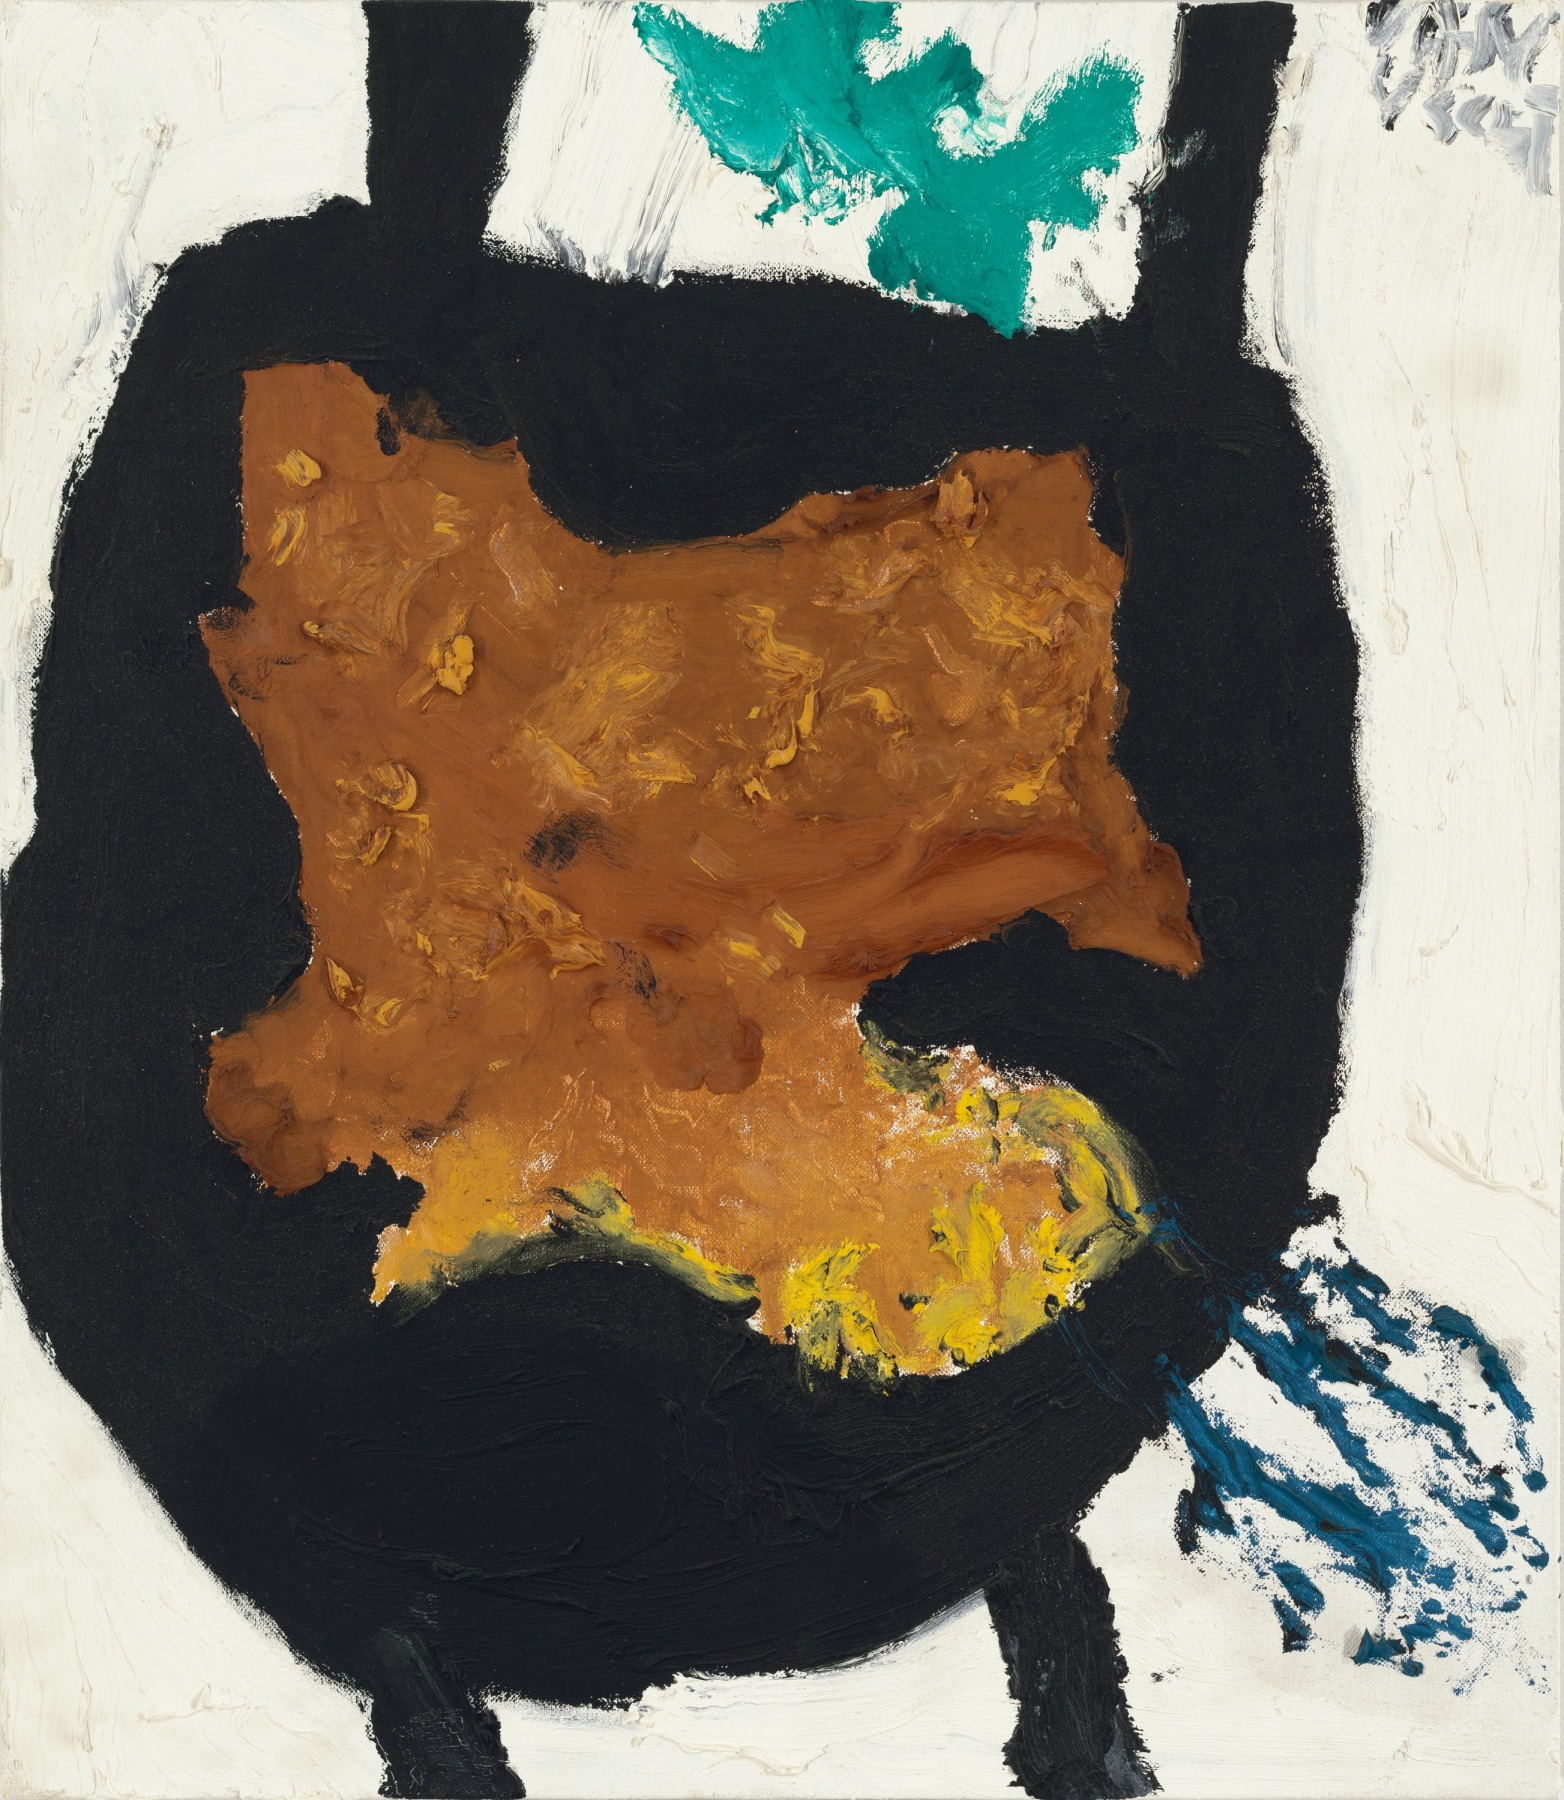 Don Van Vliet

&amp;ldquo;Untitled #22&amp;rdquo;, 1994

Oil on linen

28 x 24 1/4 inches

71 x 61.5 cm

VLI 173

$80,000